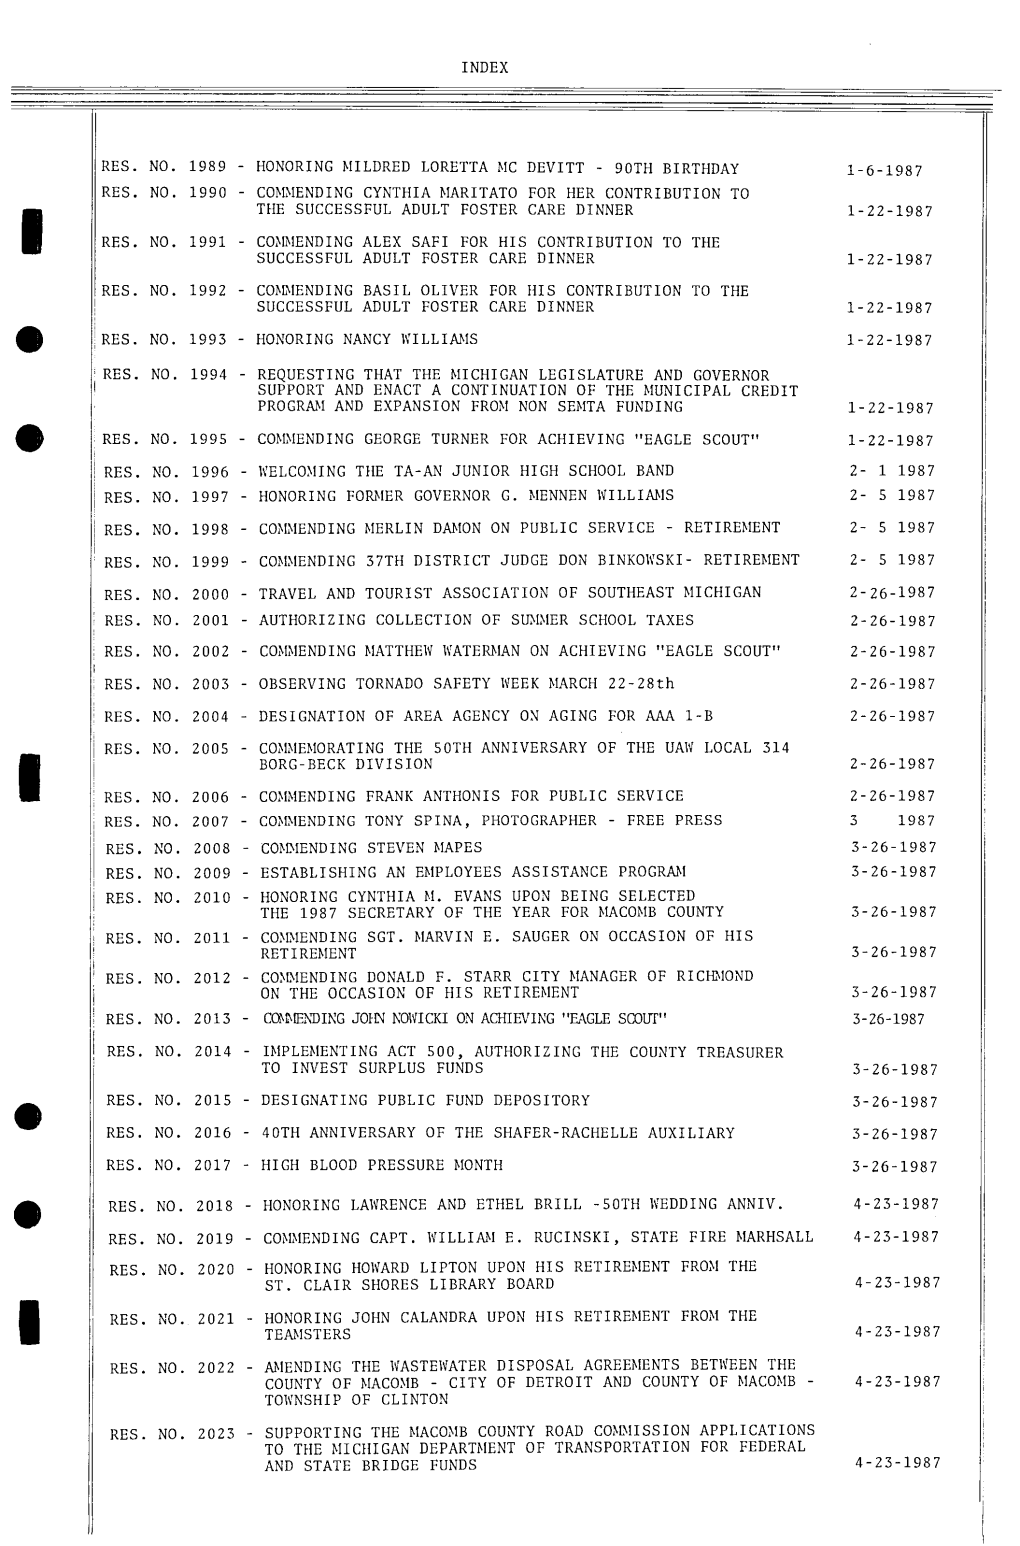 RESOLUTIONS 1987-1988.Tif